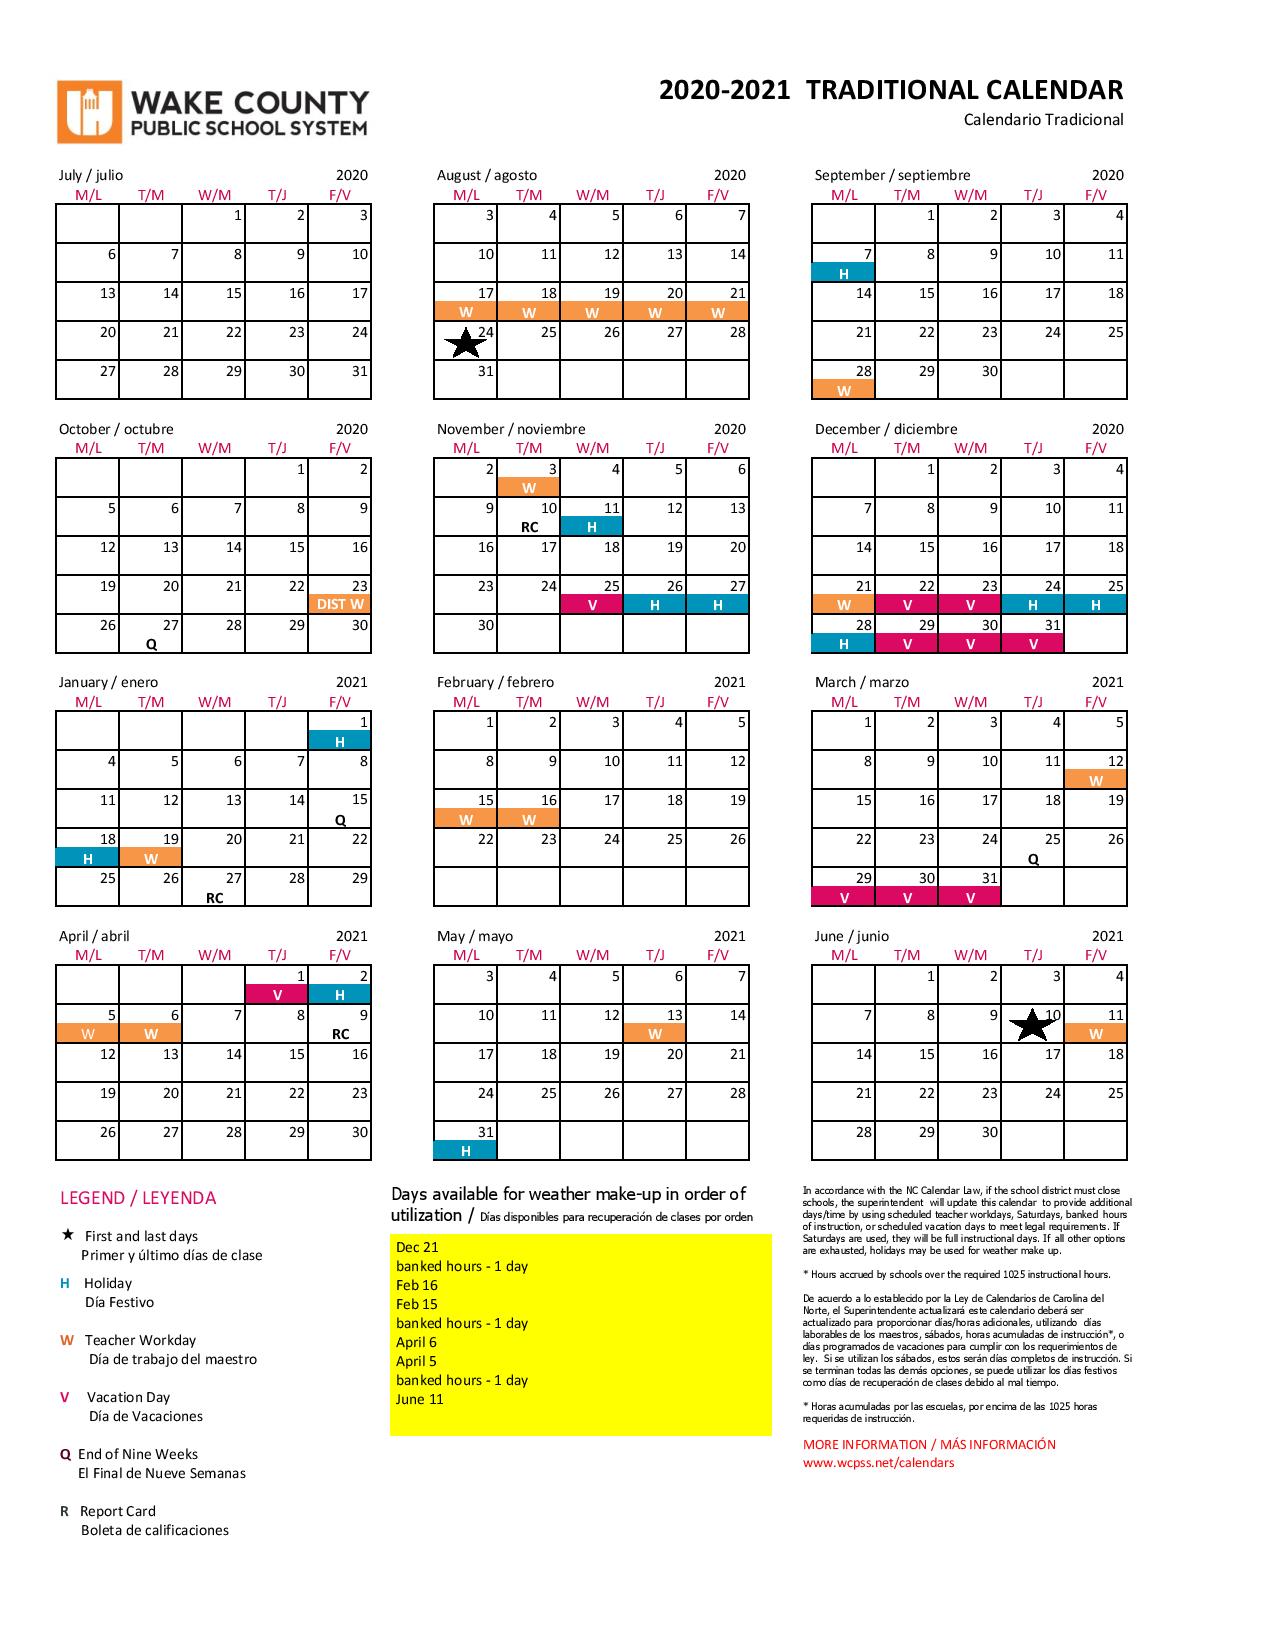 Wake County Schools Calendar 2020-2021 - Download Now